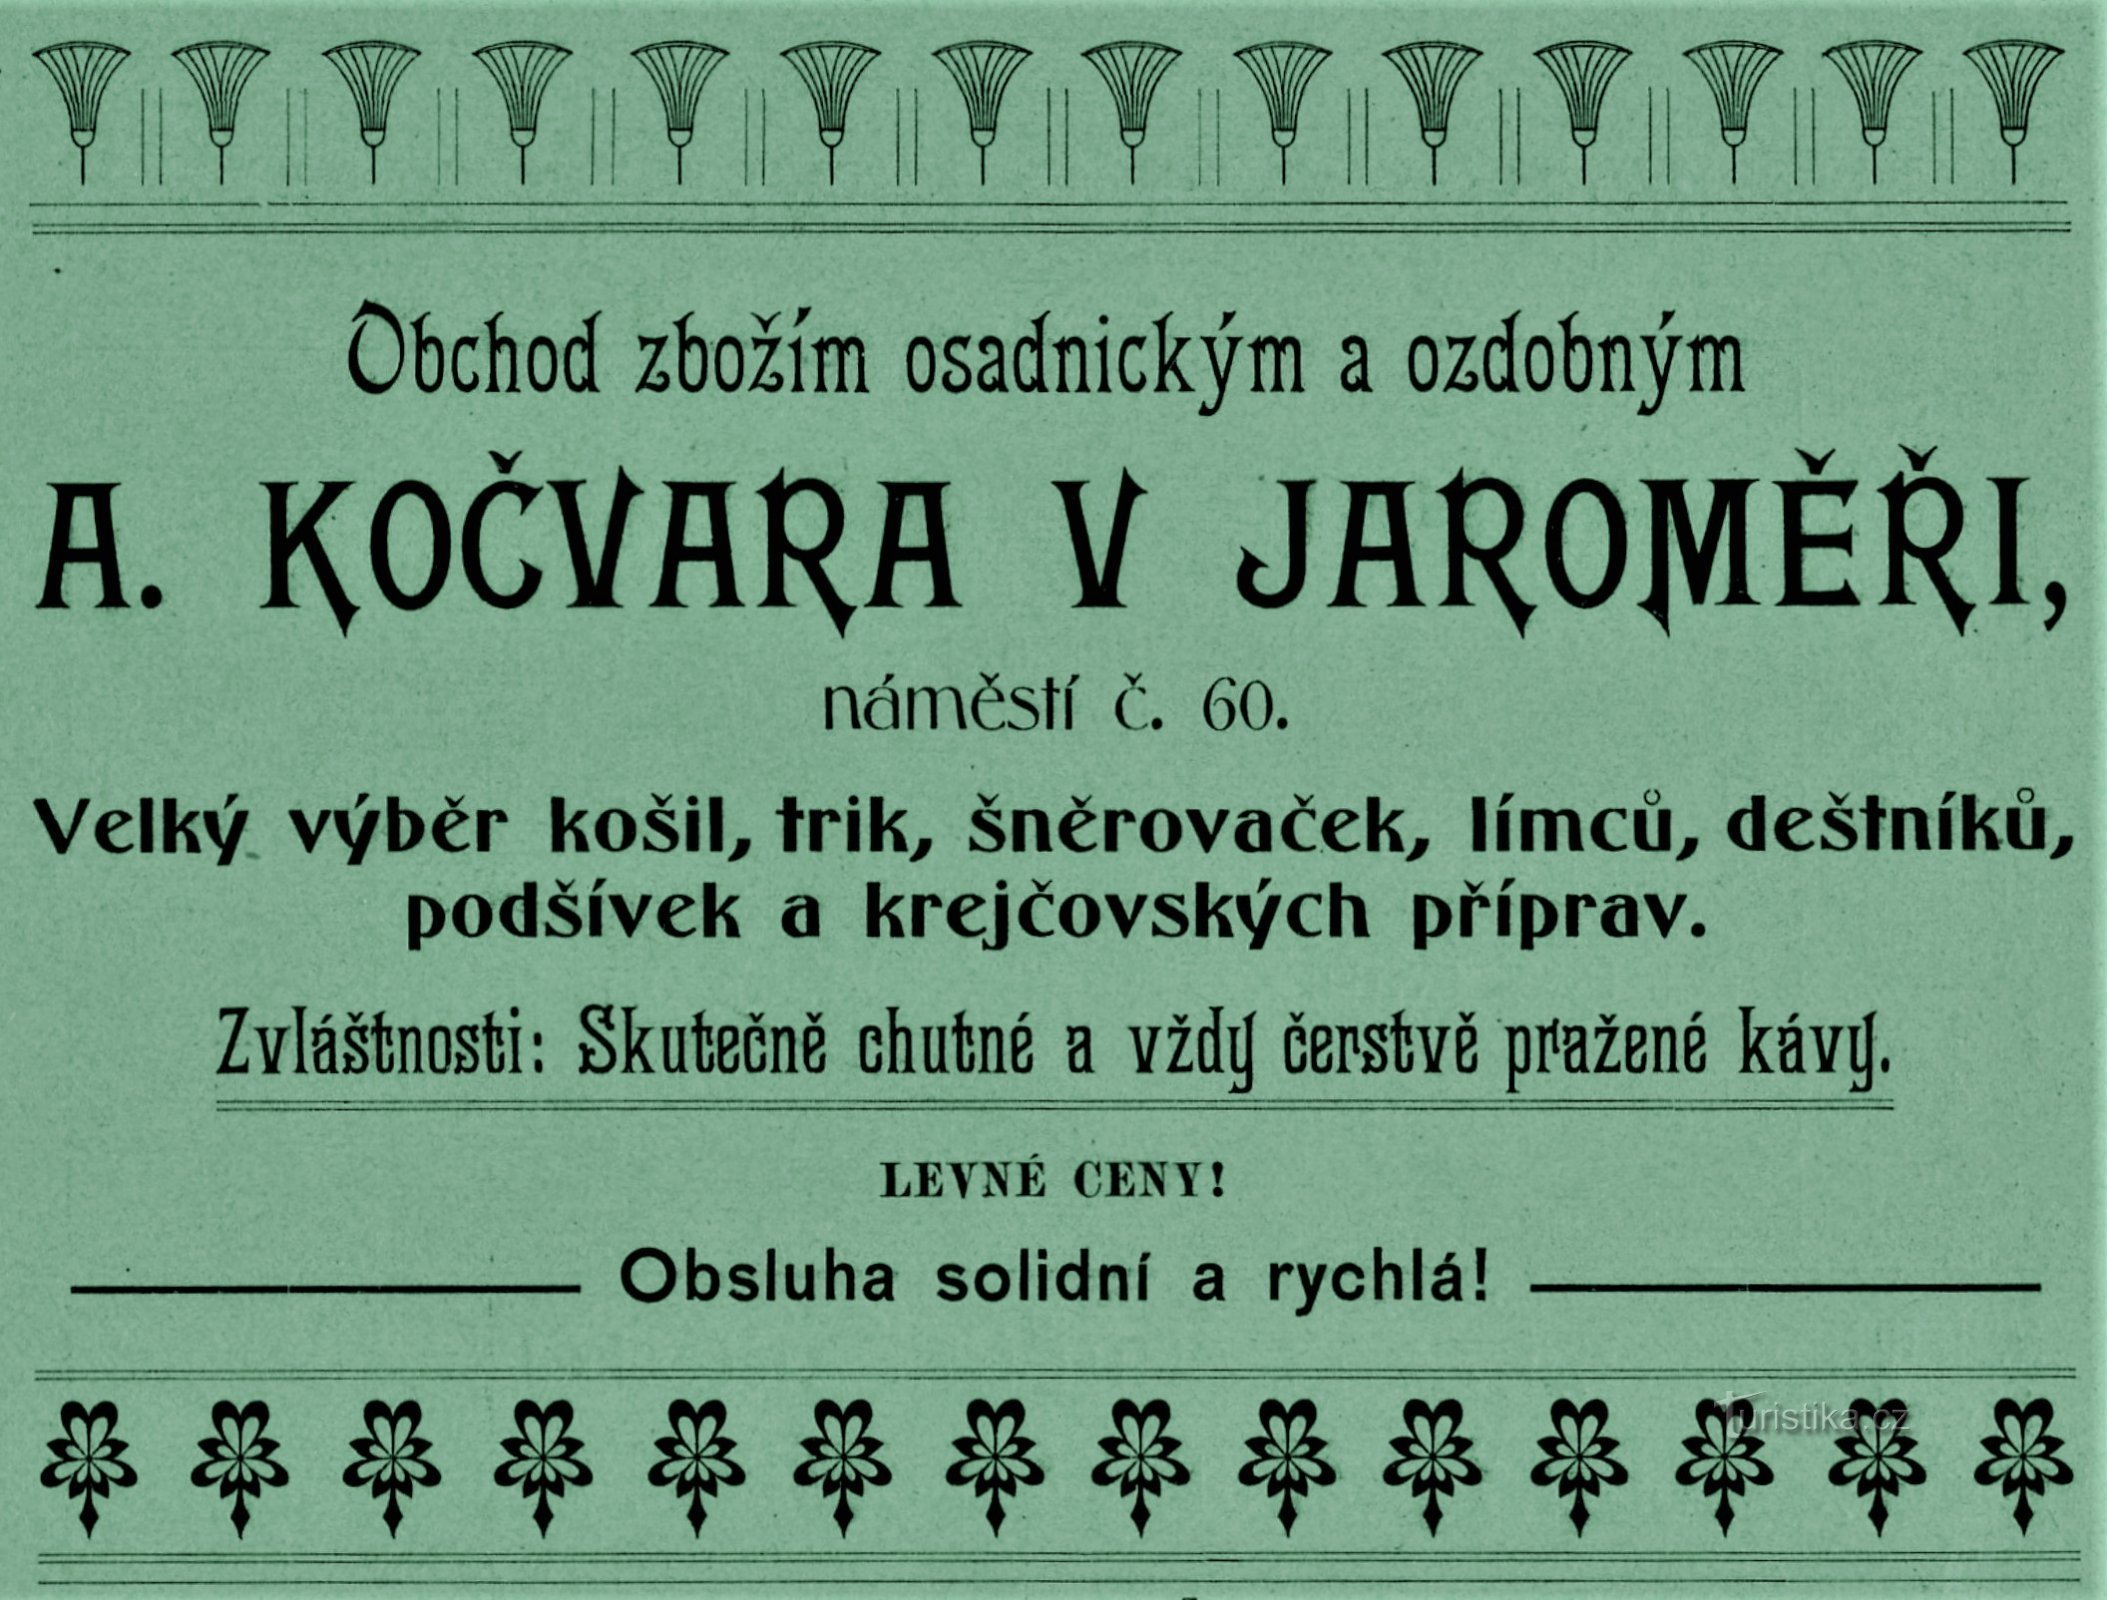 Contemporary advertisement of the company A. Kočvara in Jaroměř from 1903